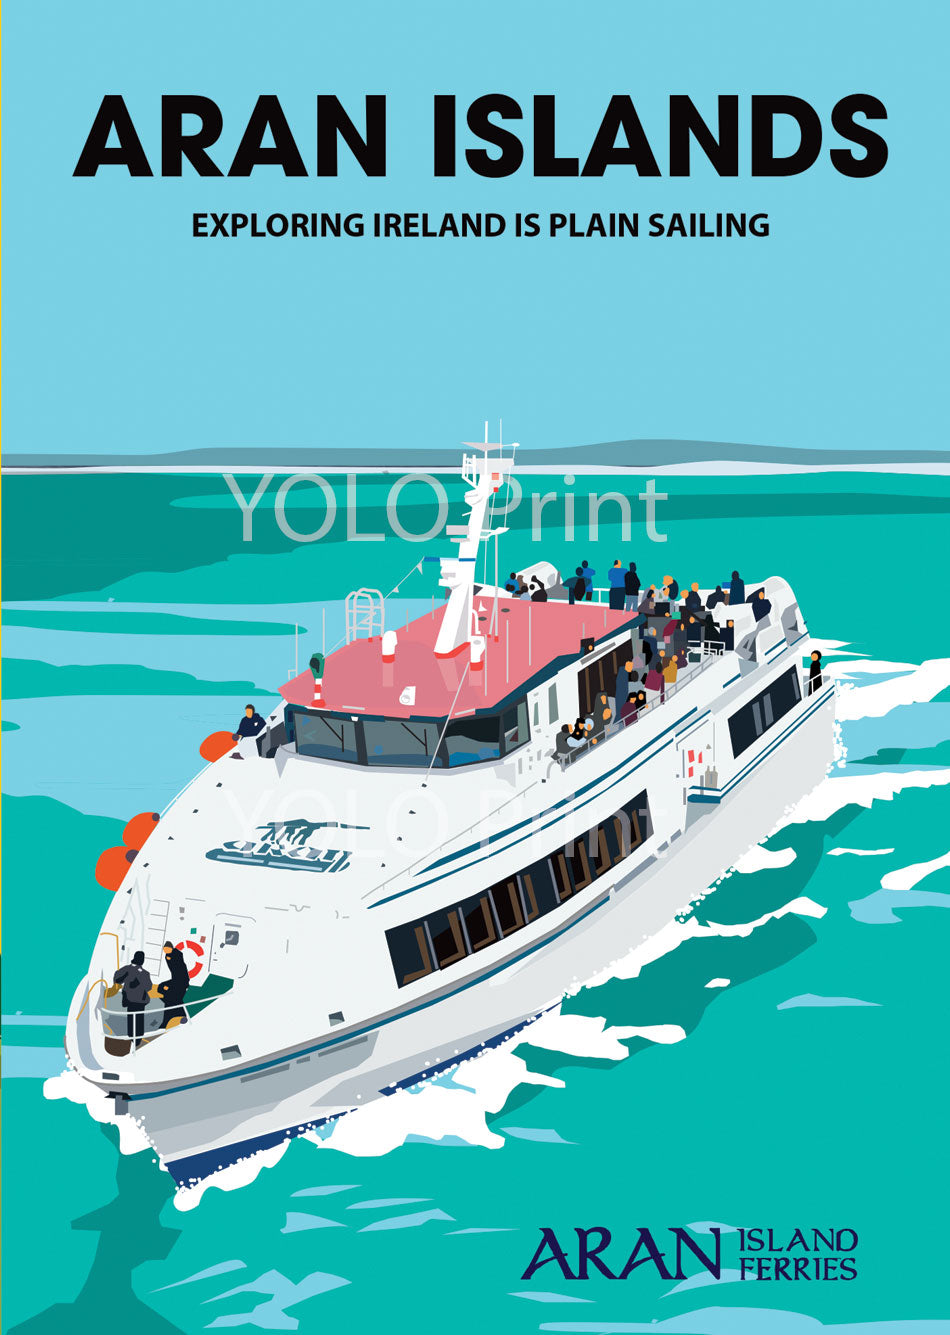 Aran Islands Postcard or A4 Mounted Print or Fridge Magnet - Aran Ferries